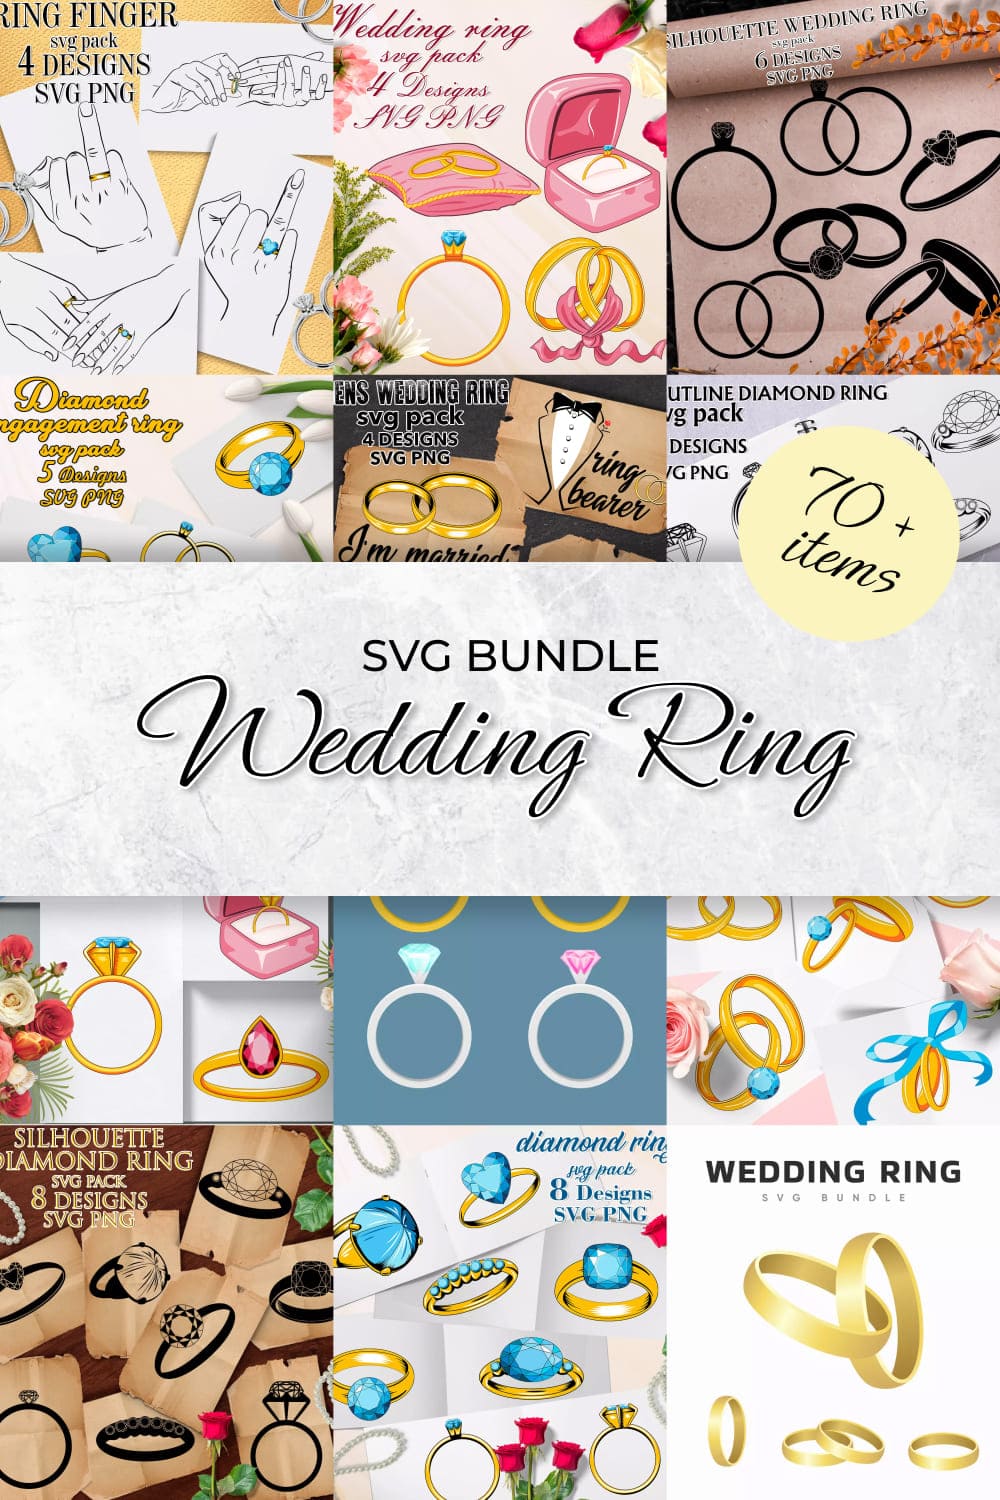 Wedding Ring SVG Bundle, picture for Pinterest.